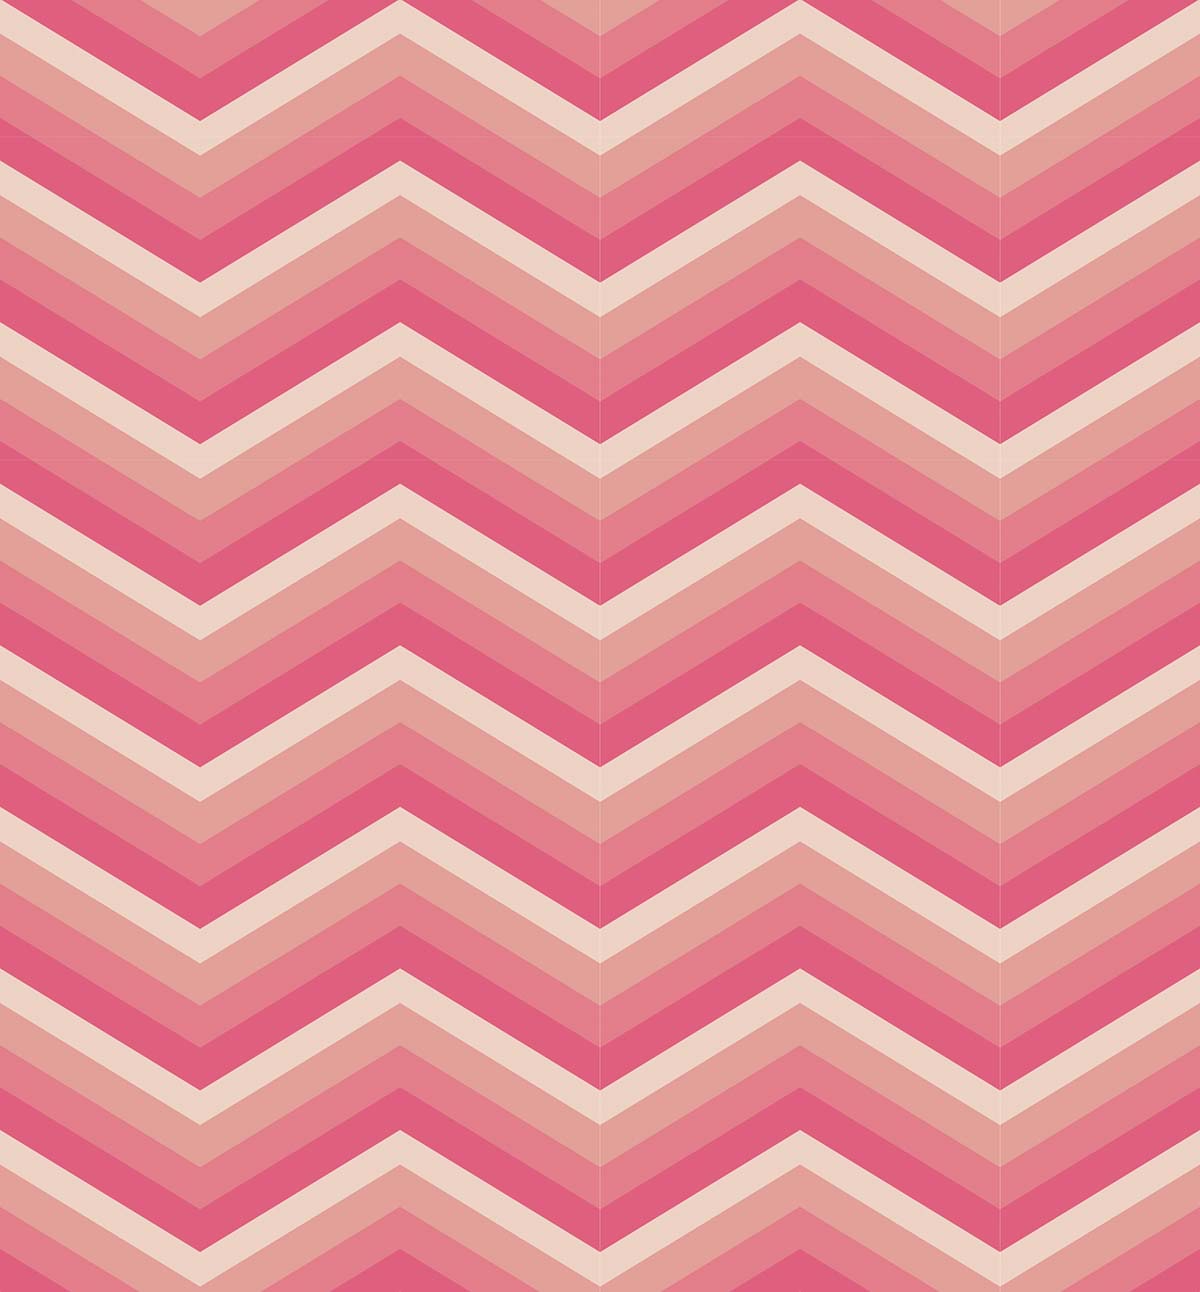 A pink and white chevron pattern